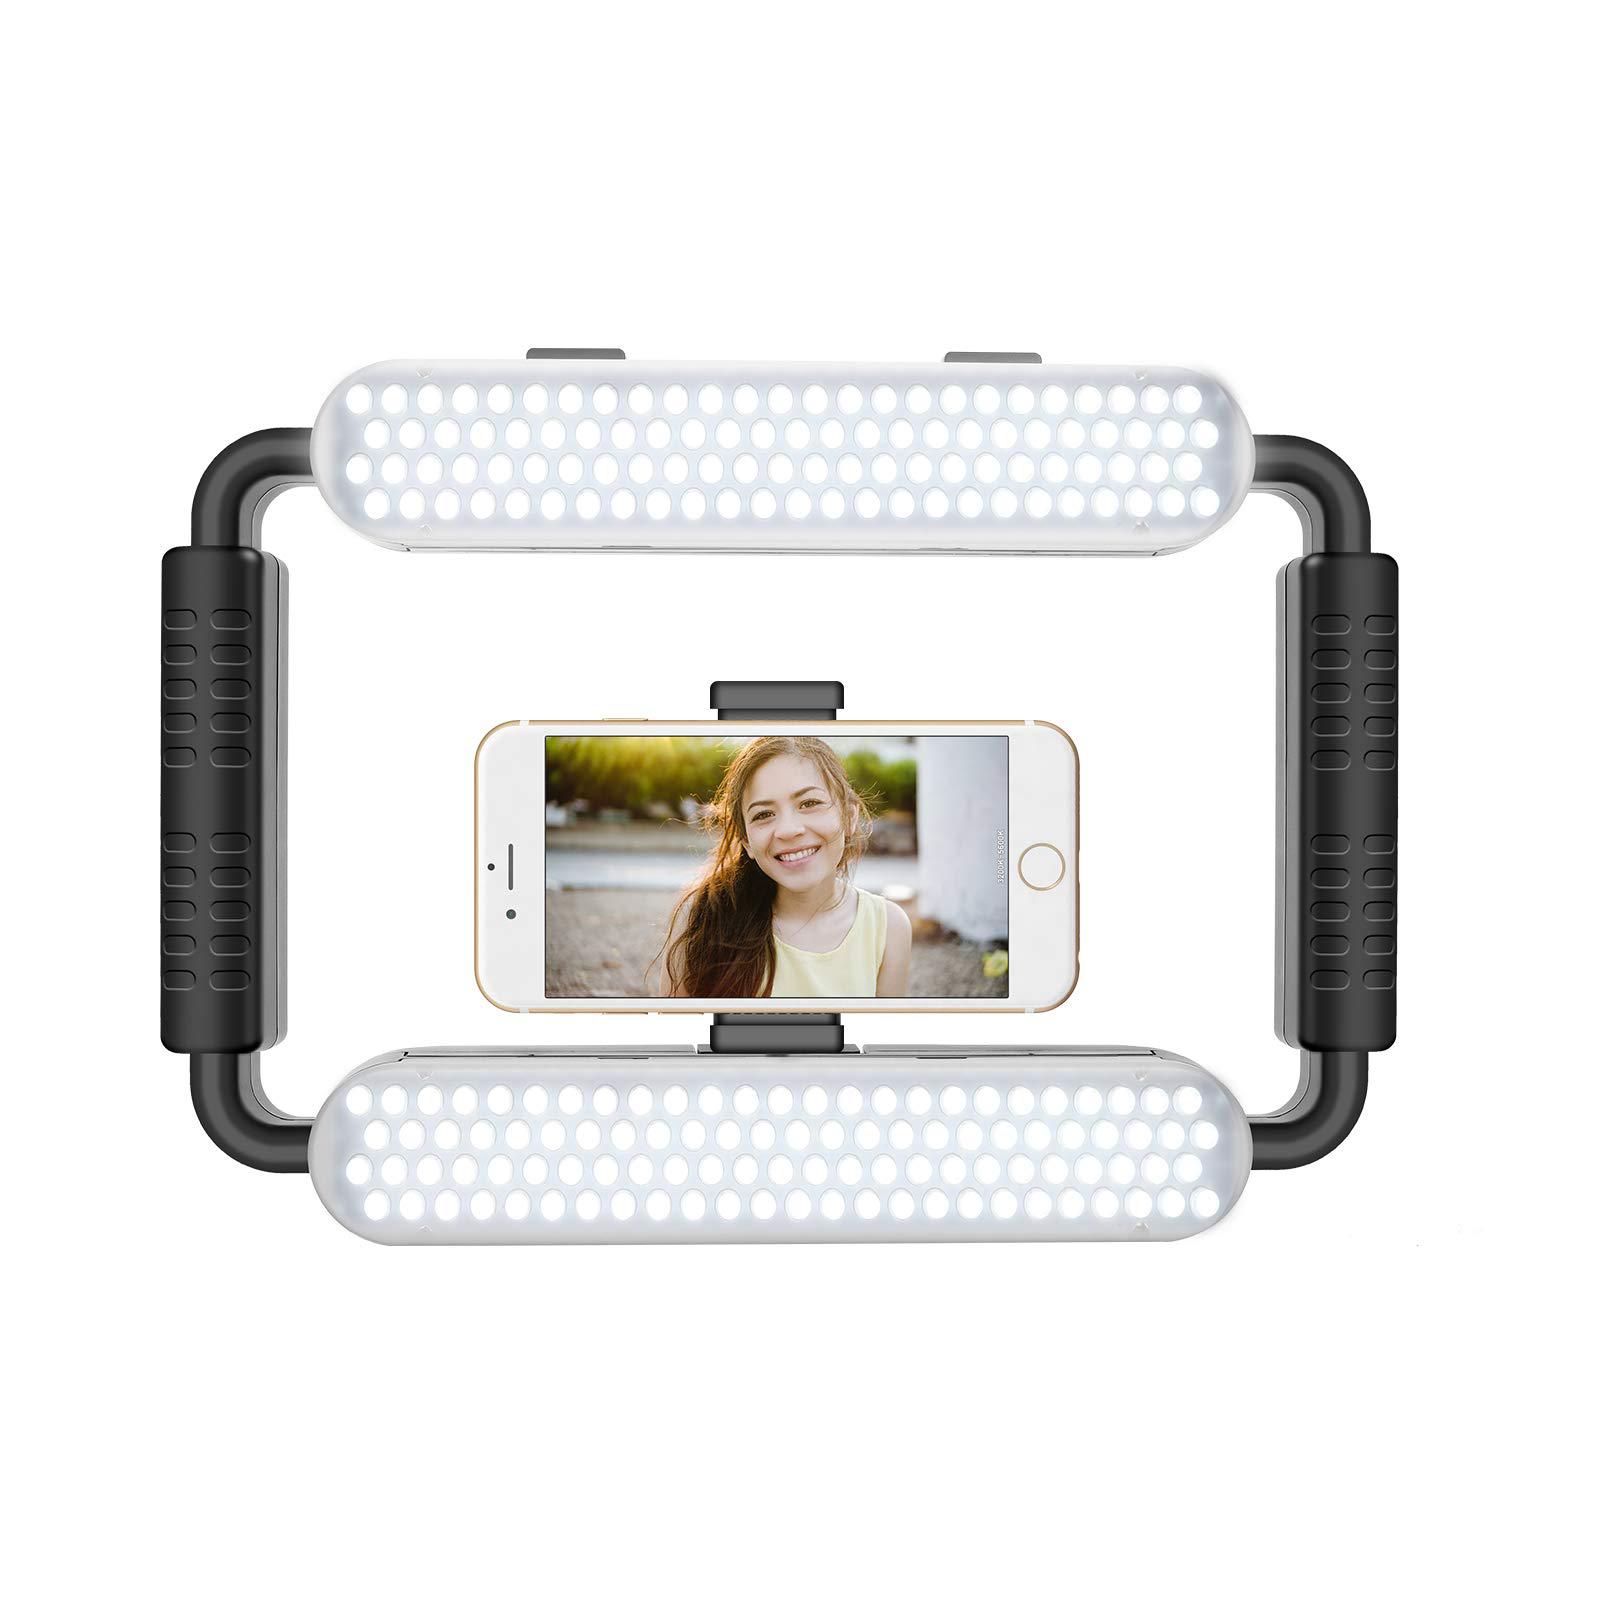 gvm great video maker led ring light 5600k selfie light, smartphone video rig & phone video stabilizer for camera, smartphone